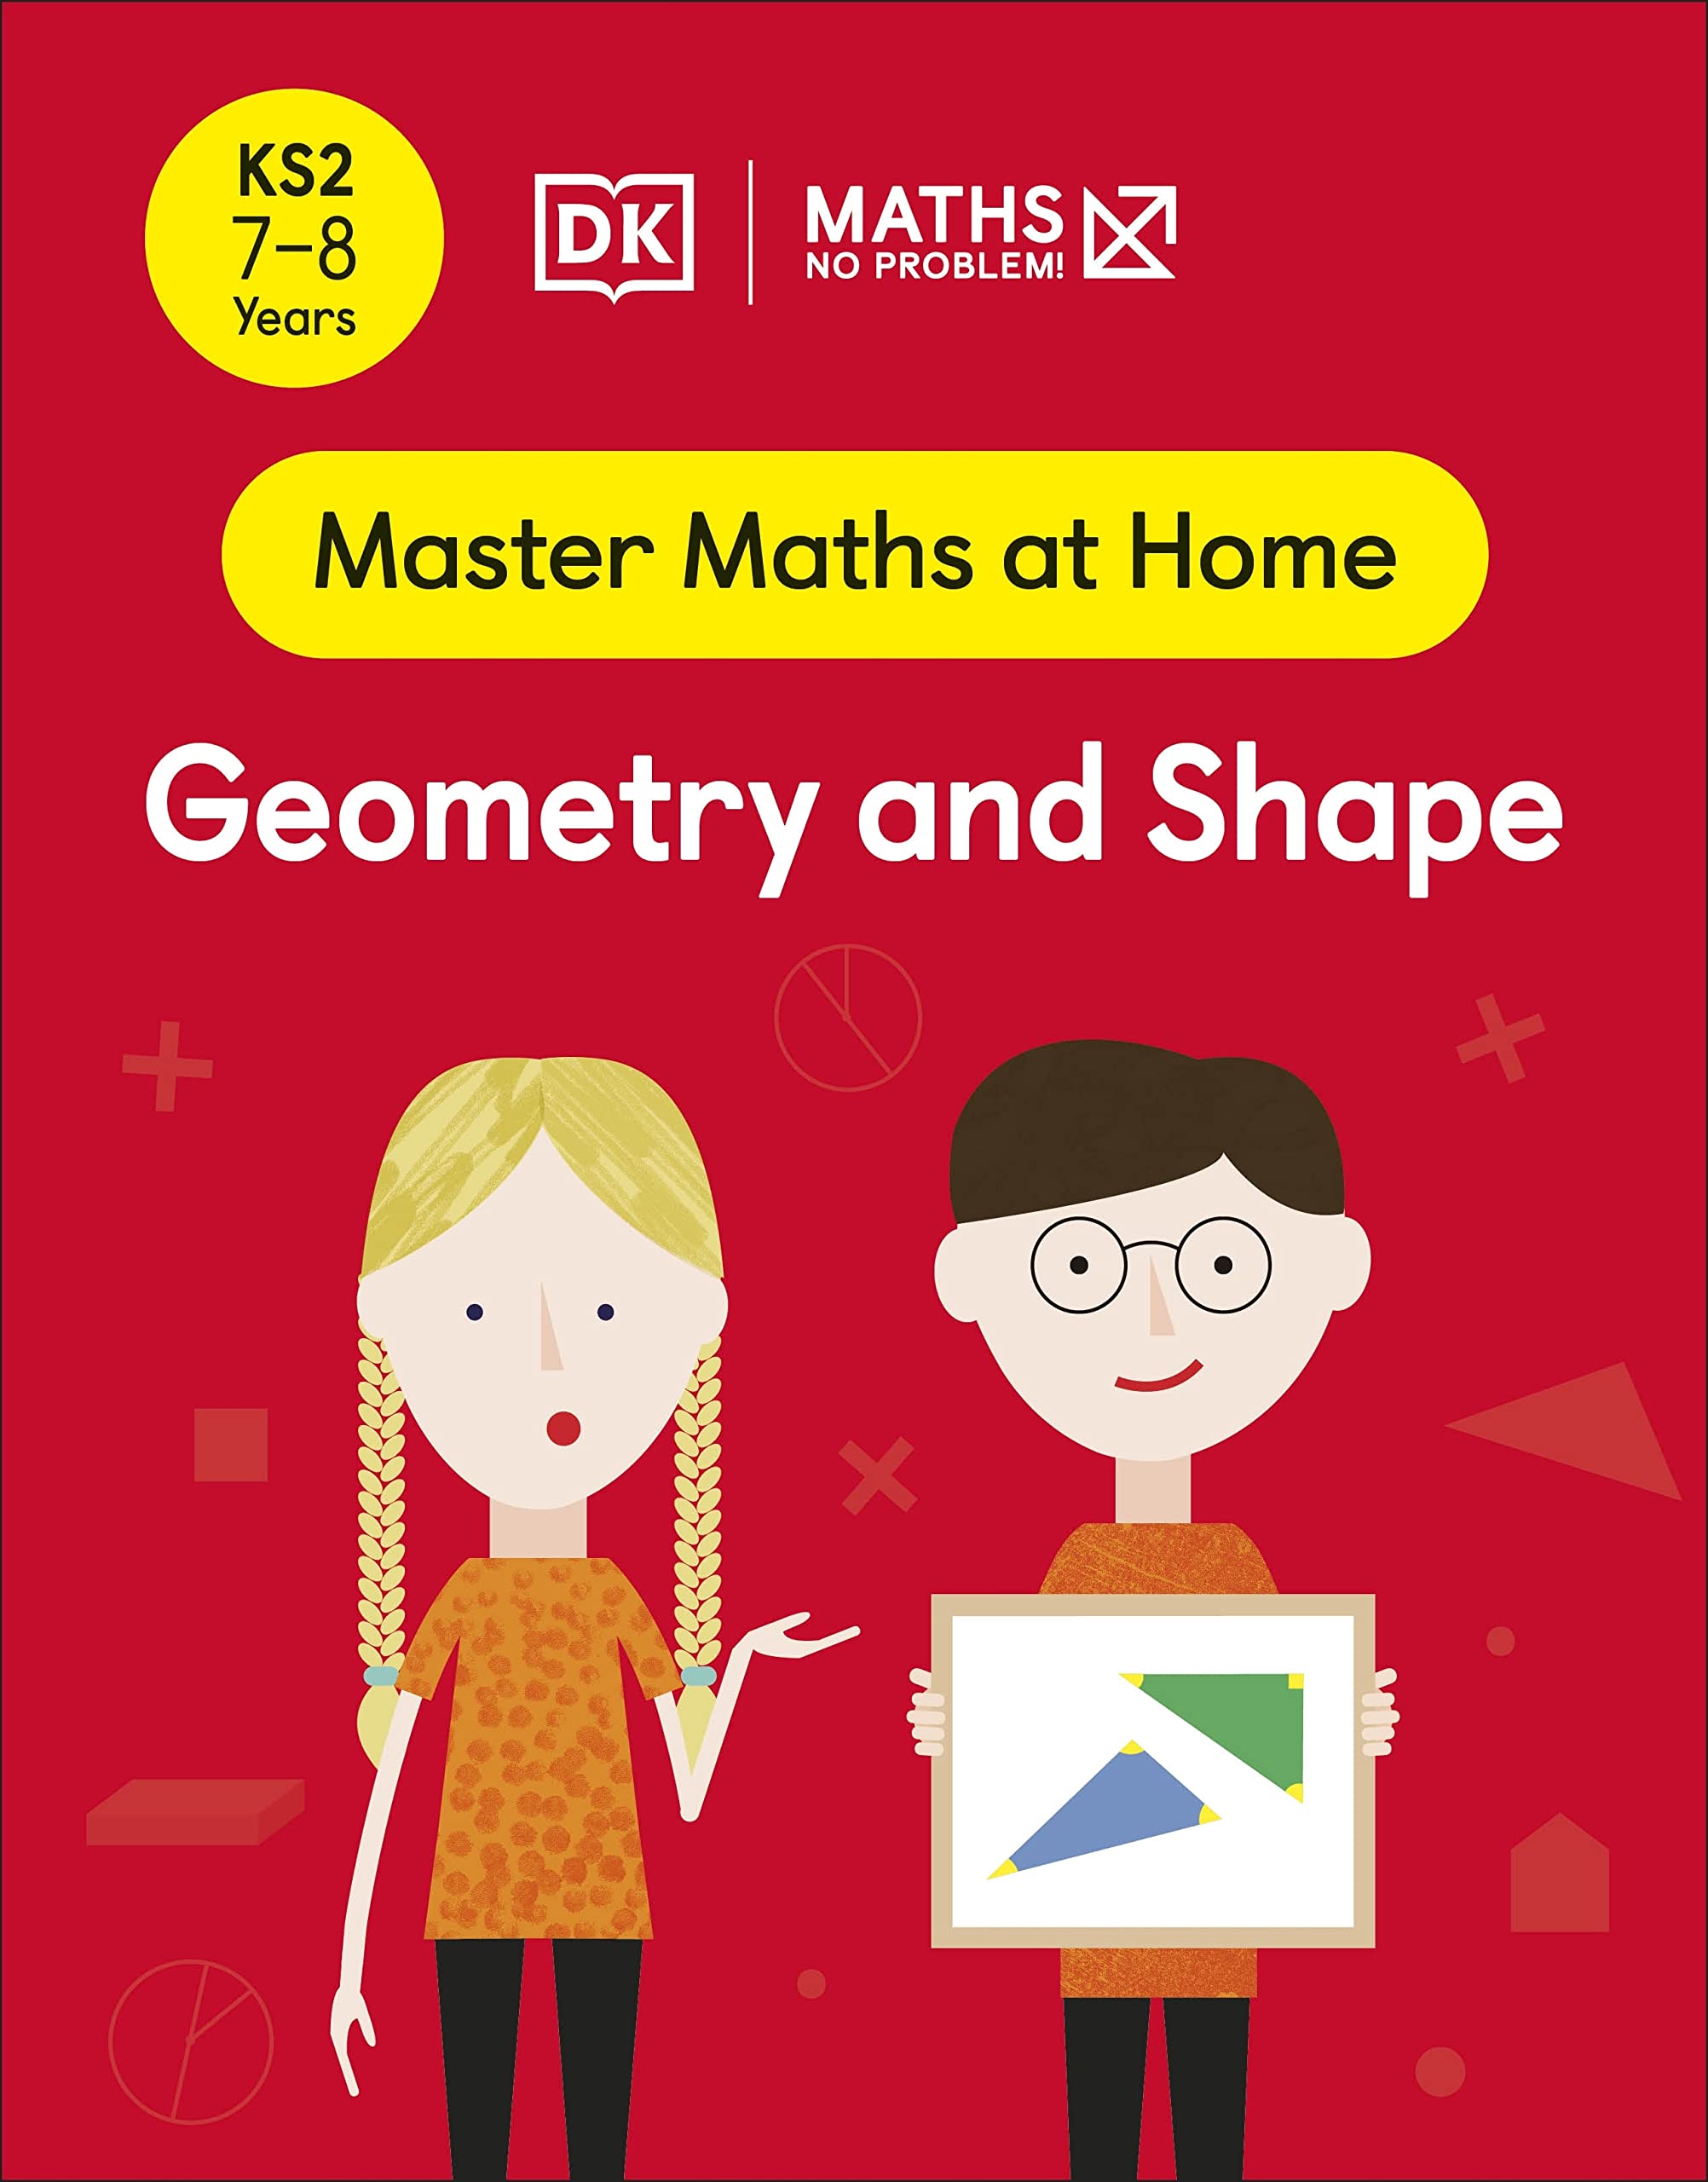 Maths - No Problem! Geometry and Shape